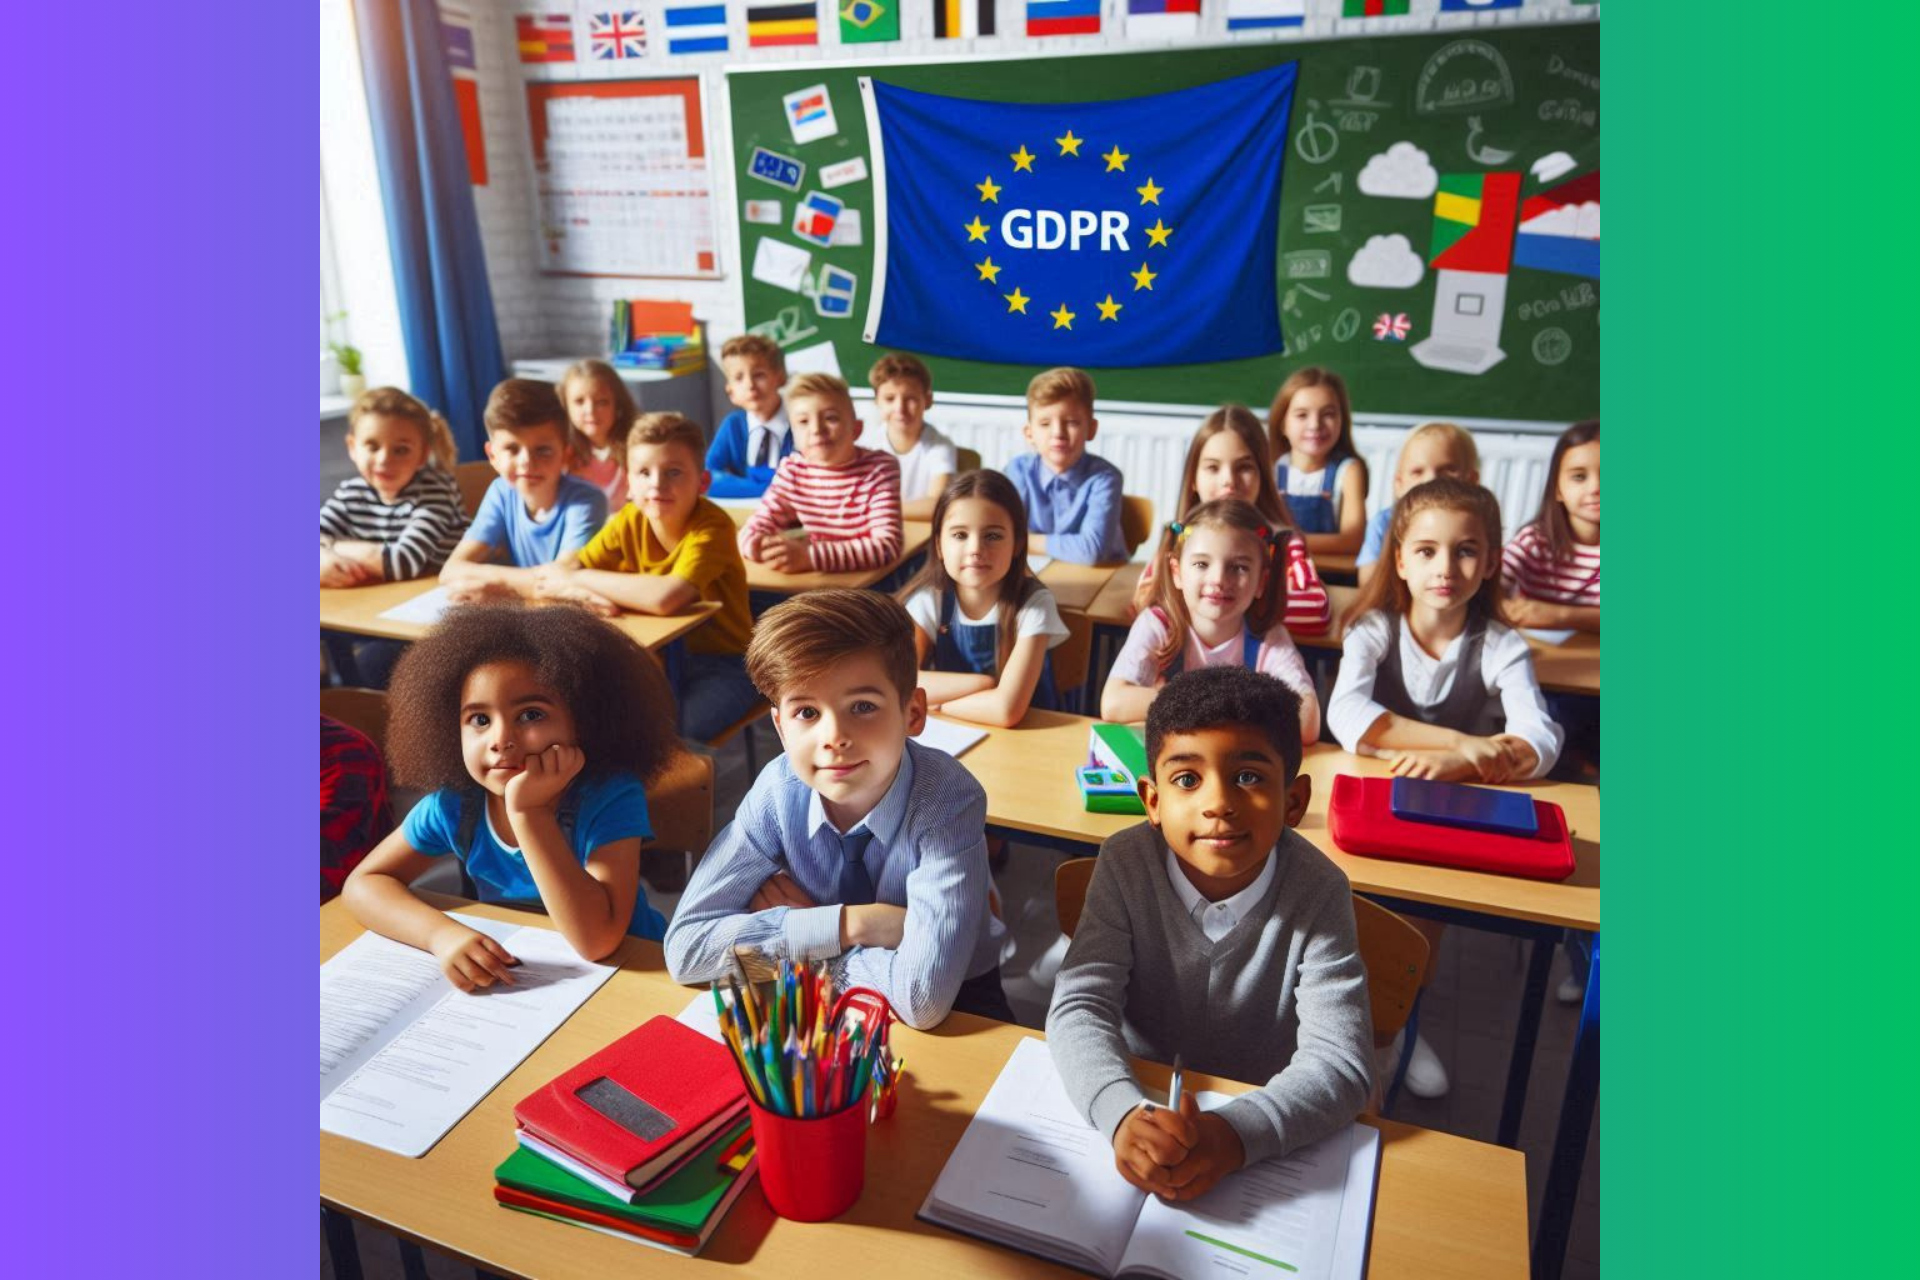 Microsoft 365 Education is allegedly breaking GDPR rules in EU